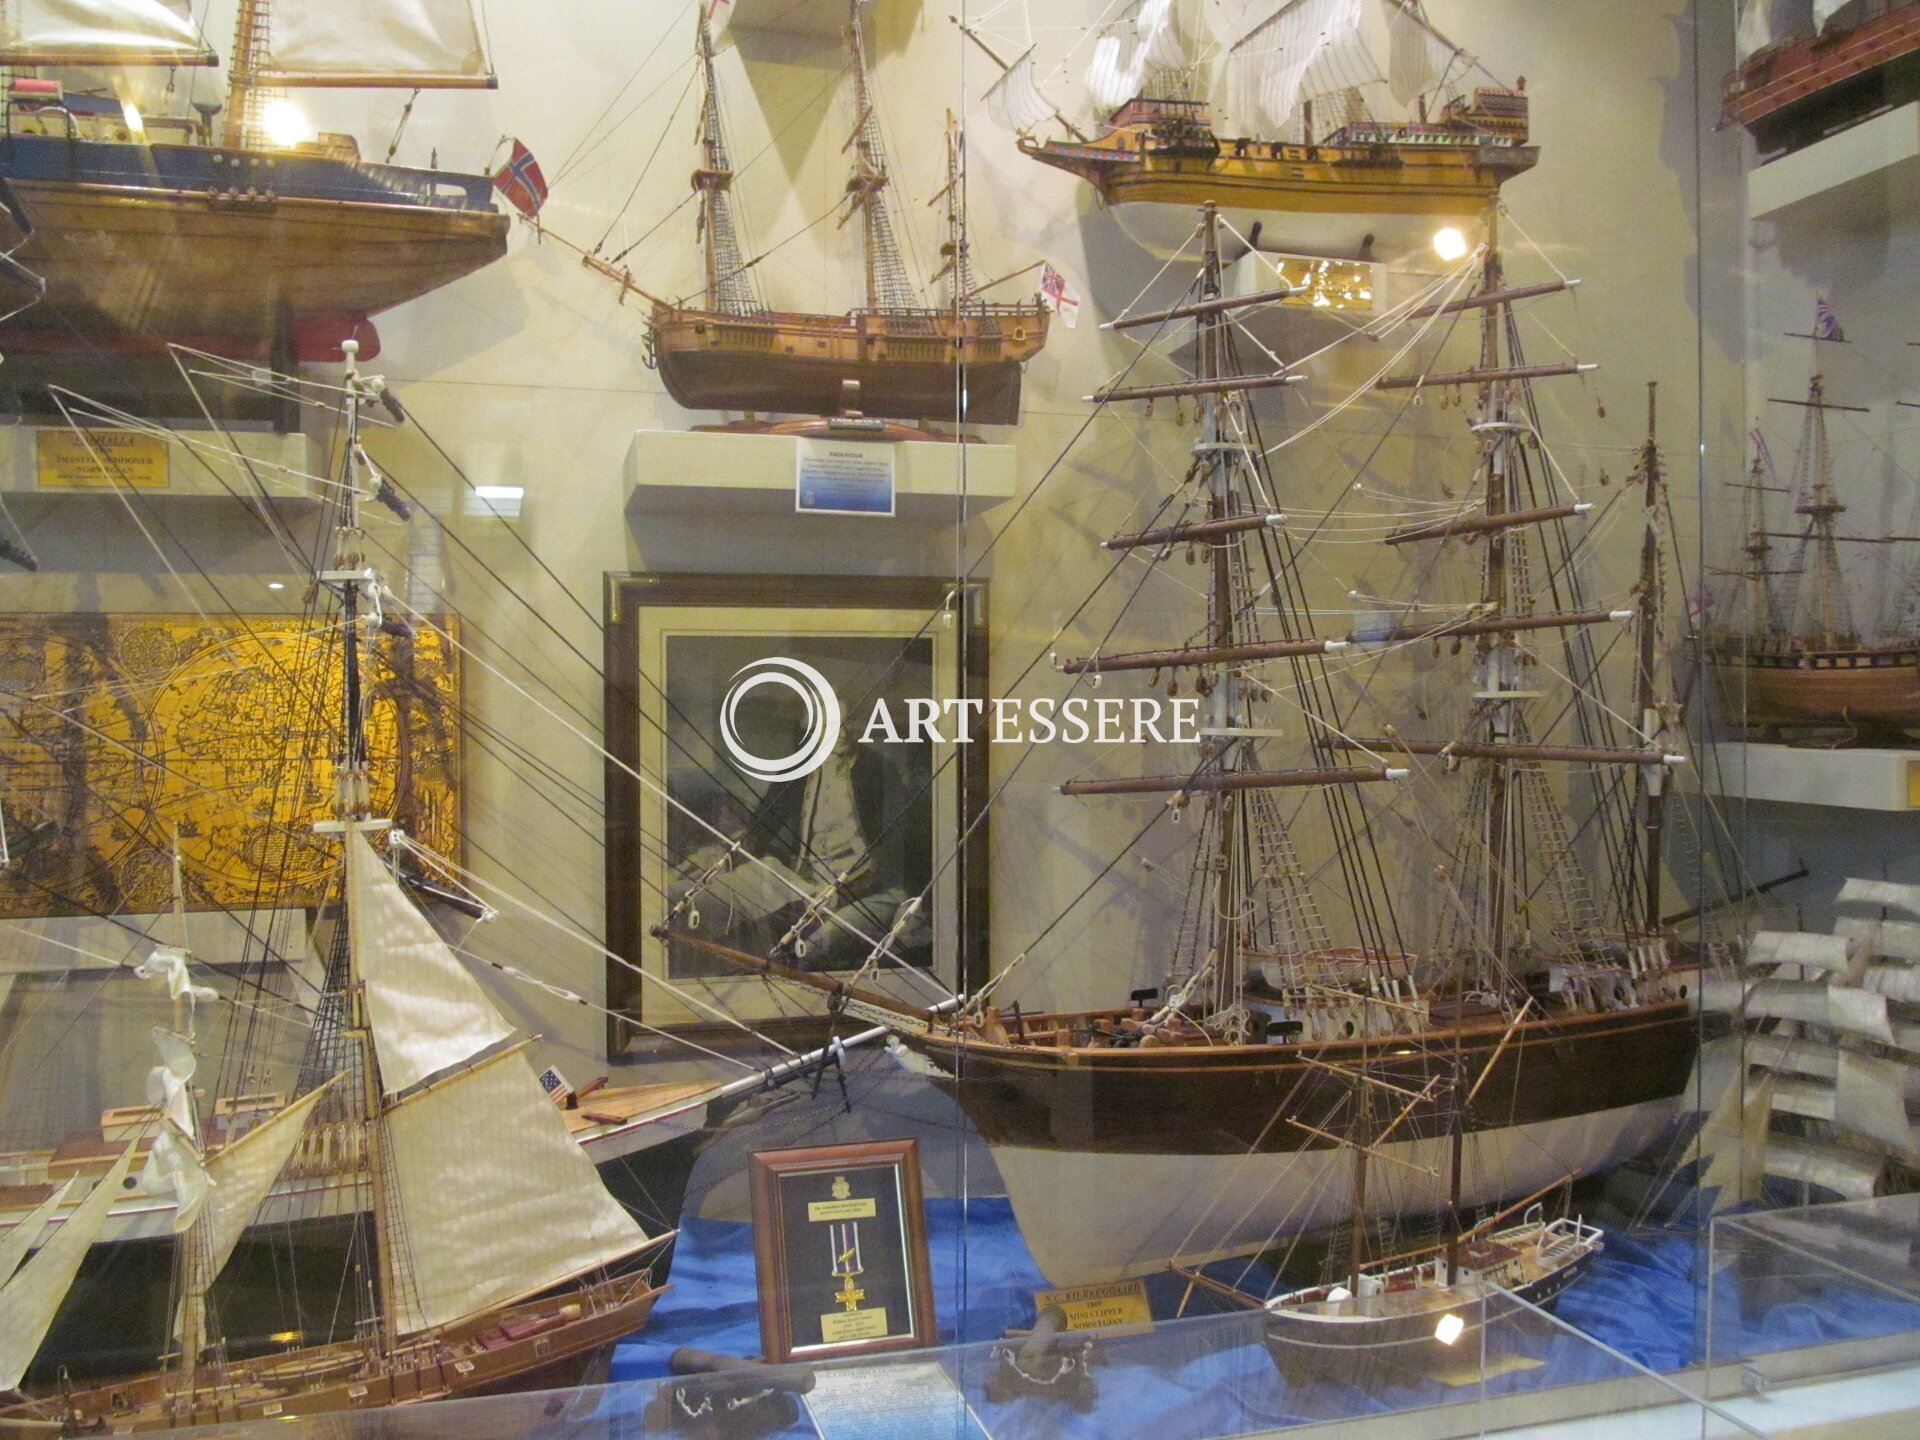 Ballina Naval & Maritime Museum